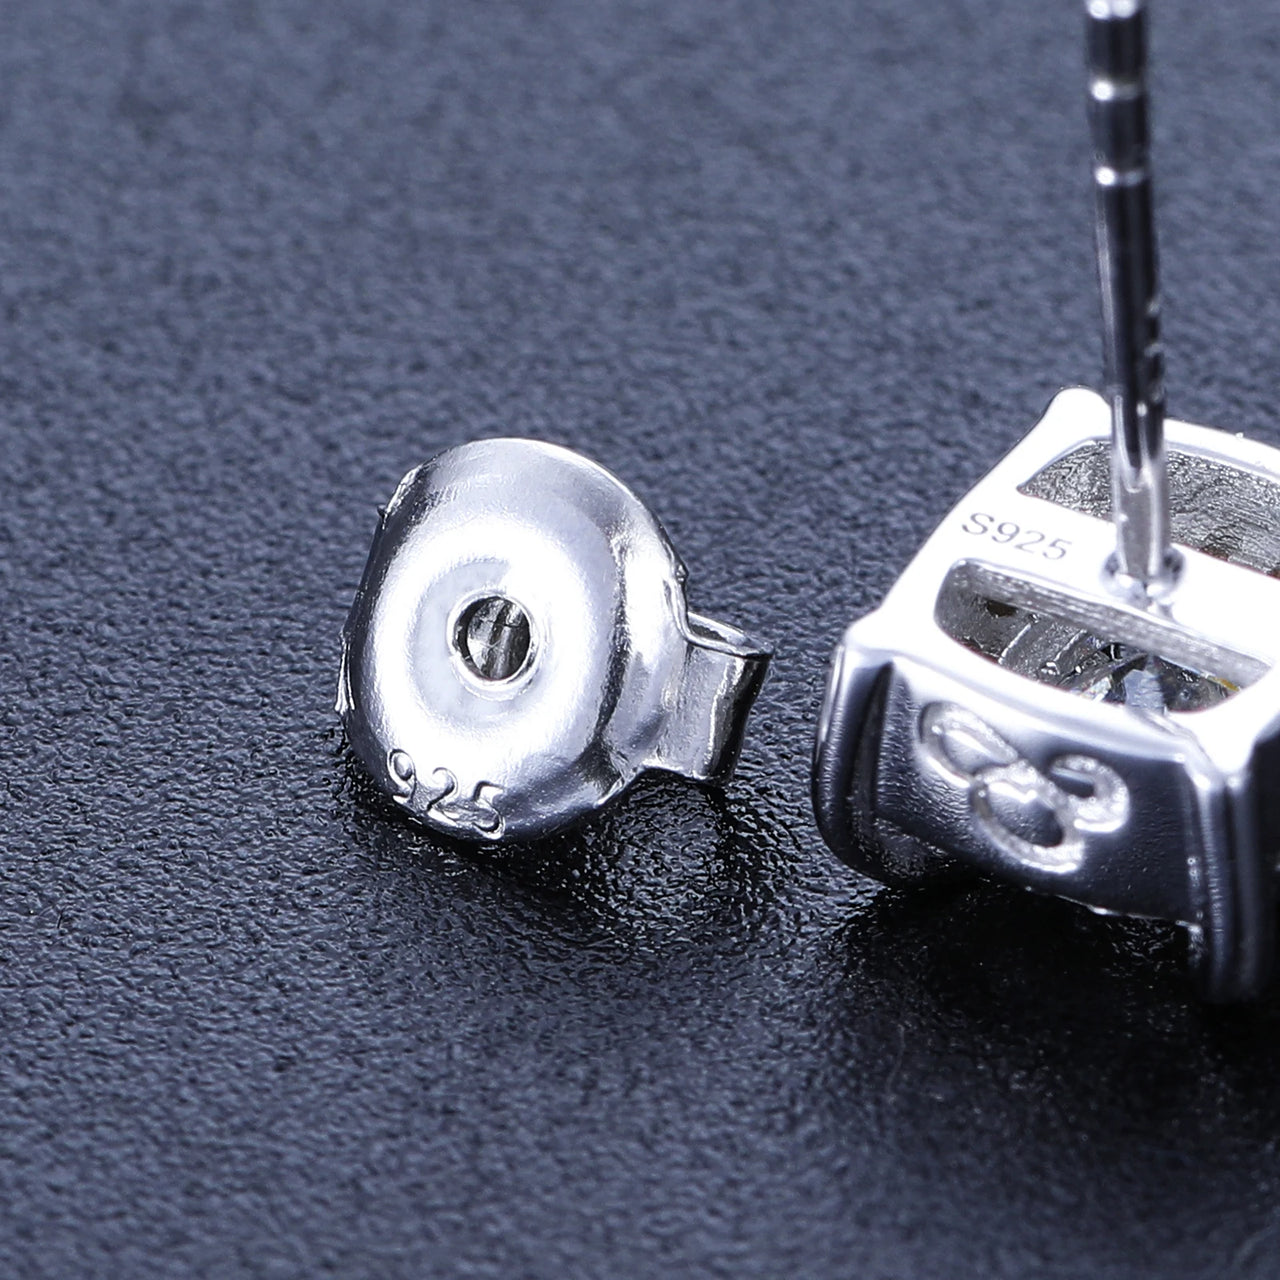 8mm S925 Moissanite Diamond Cushion Cut Earrings - Different Drips